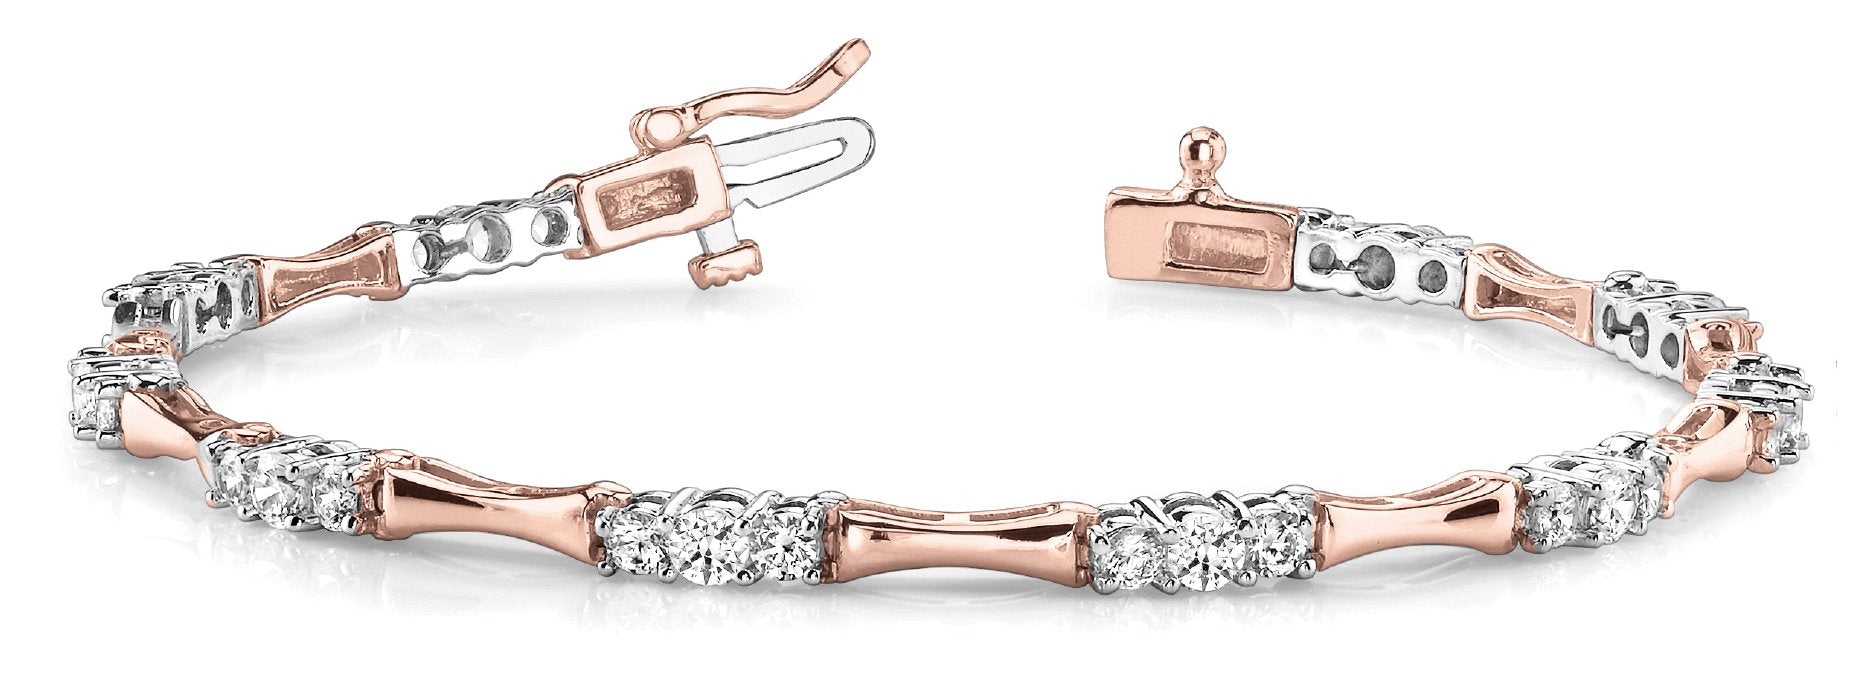 Fancy Diamond Bracelet Ladies 2.13ct tw - 14kt Gold